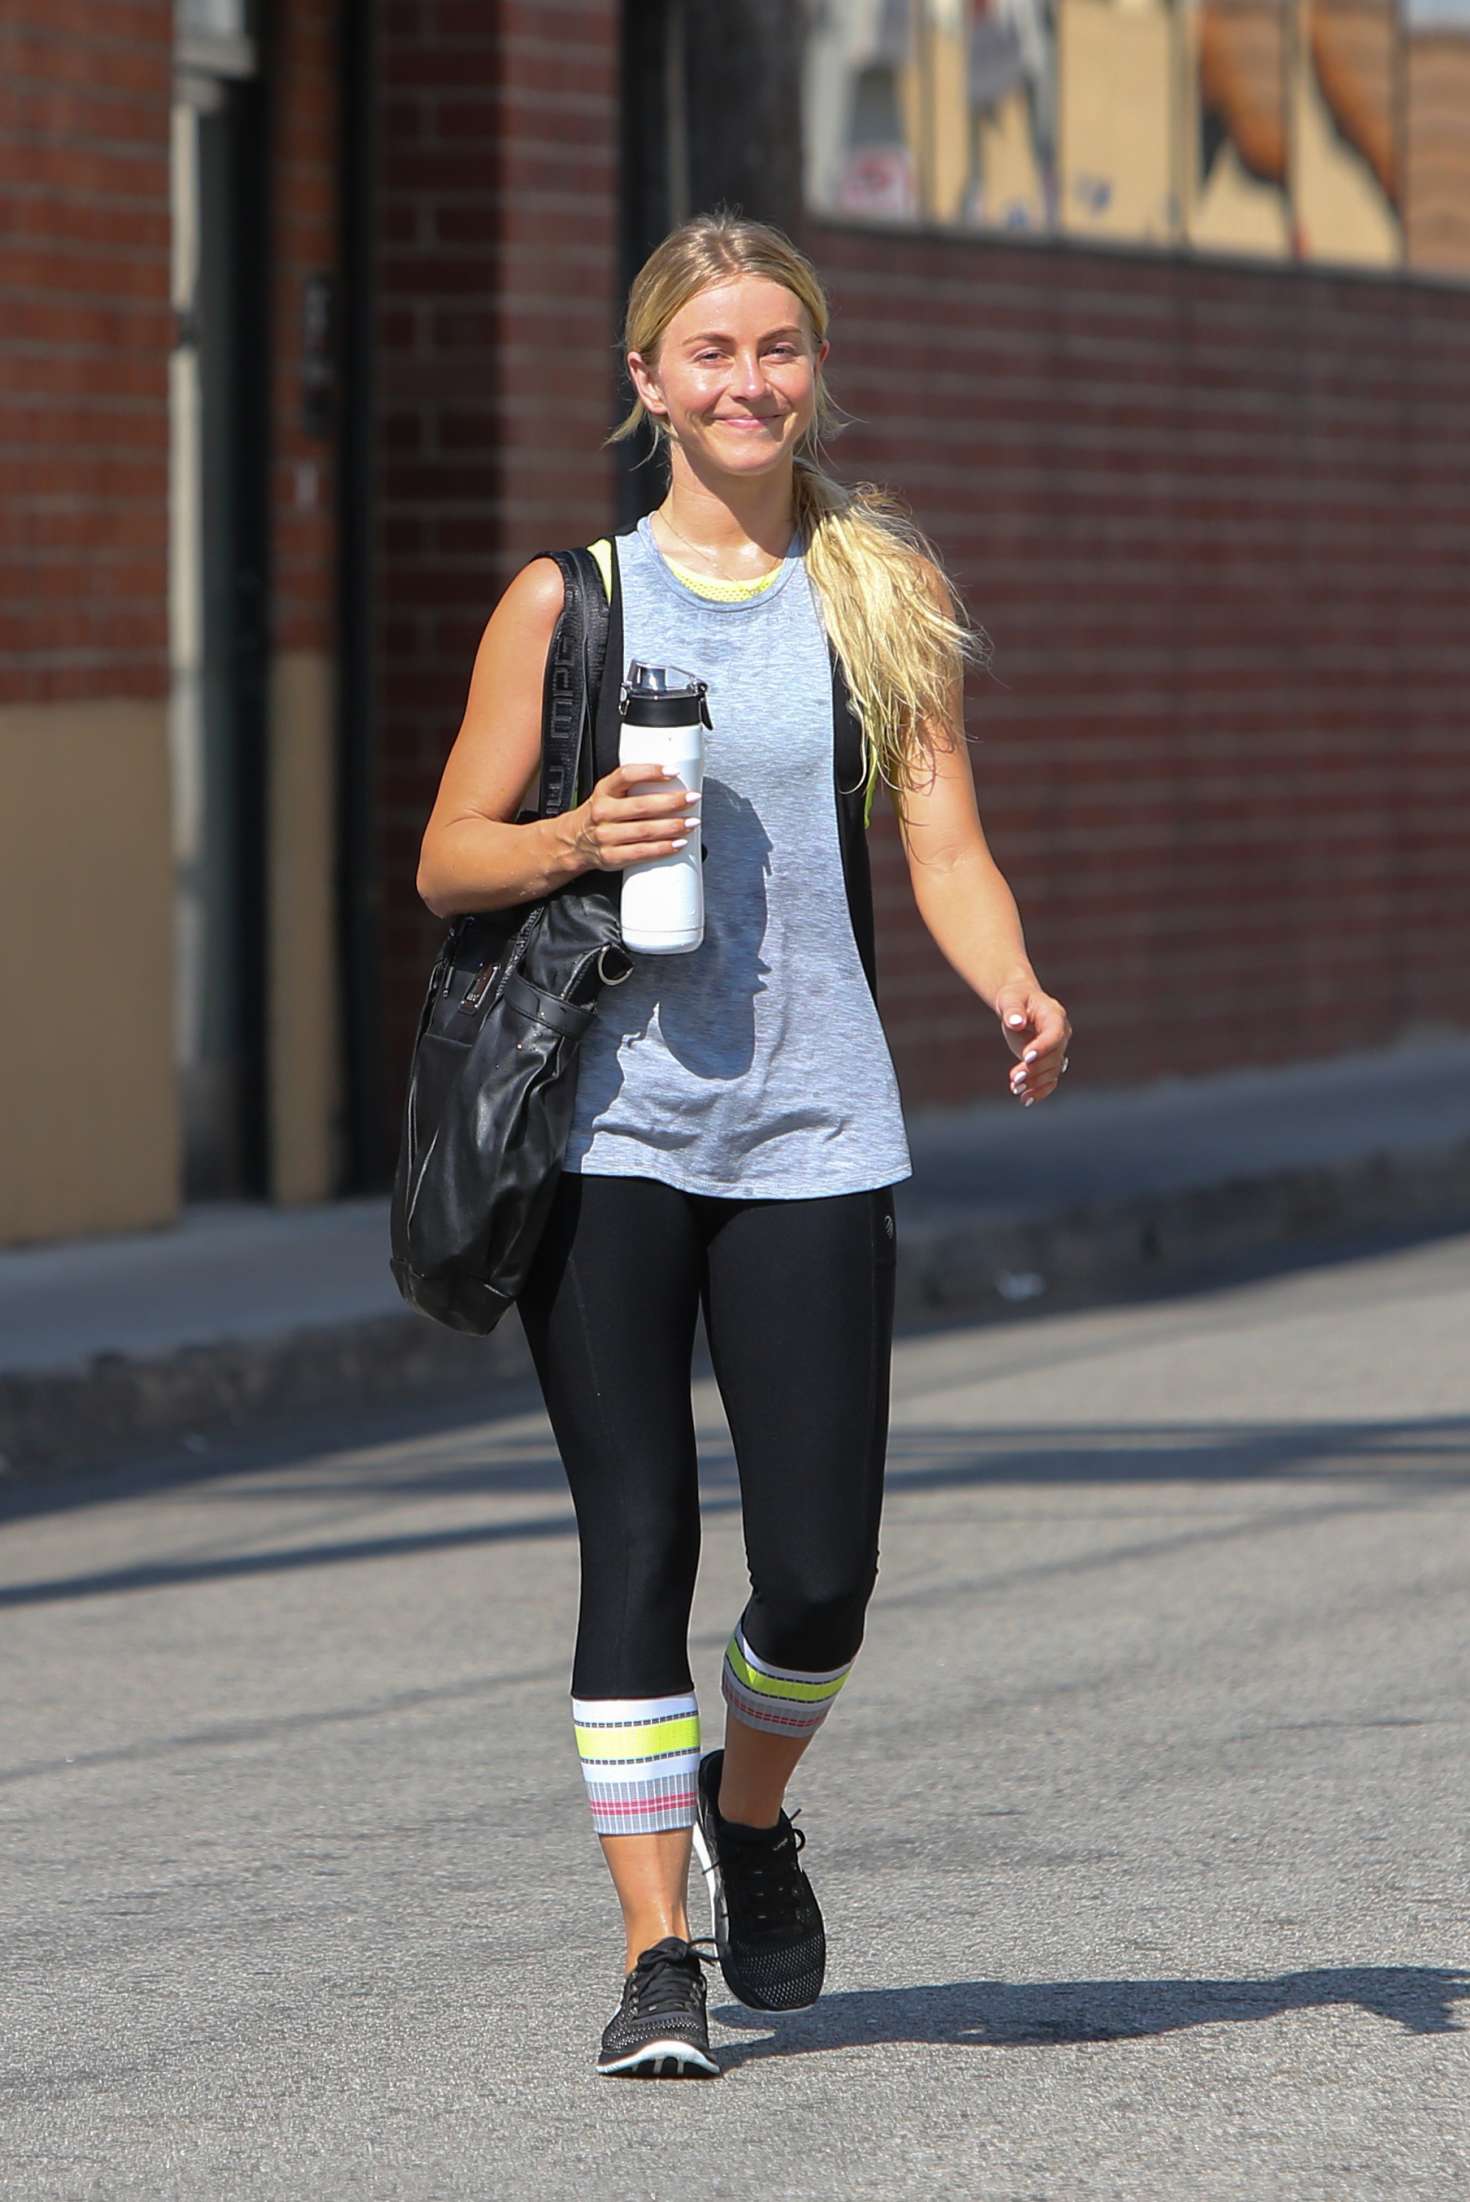 Julianne Hough in Spandex Leaving the Gym in Los Angeles. 